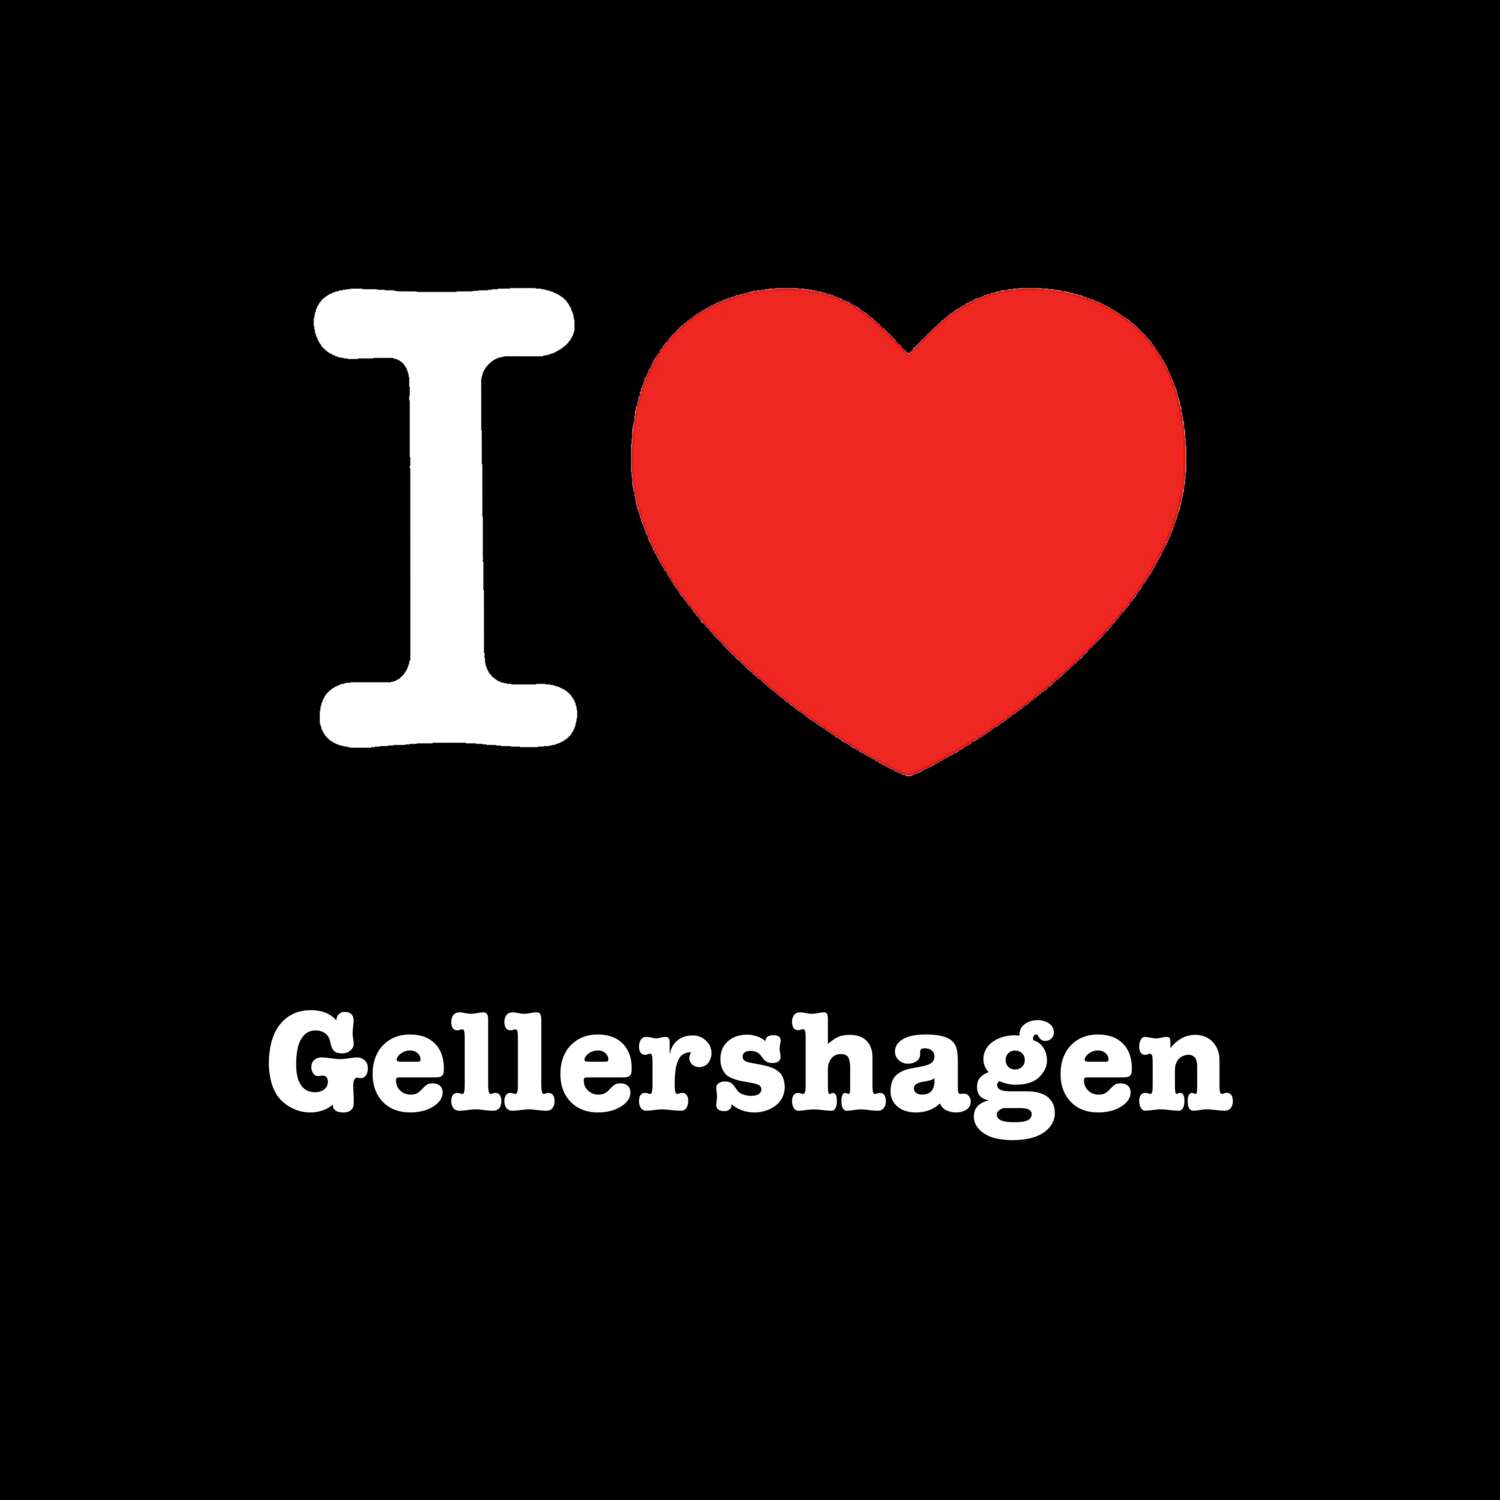 Gellershagen T-Shirt »I love«